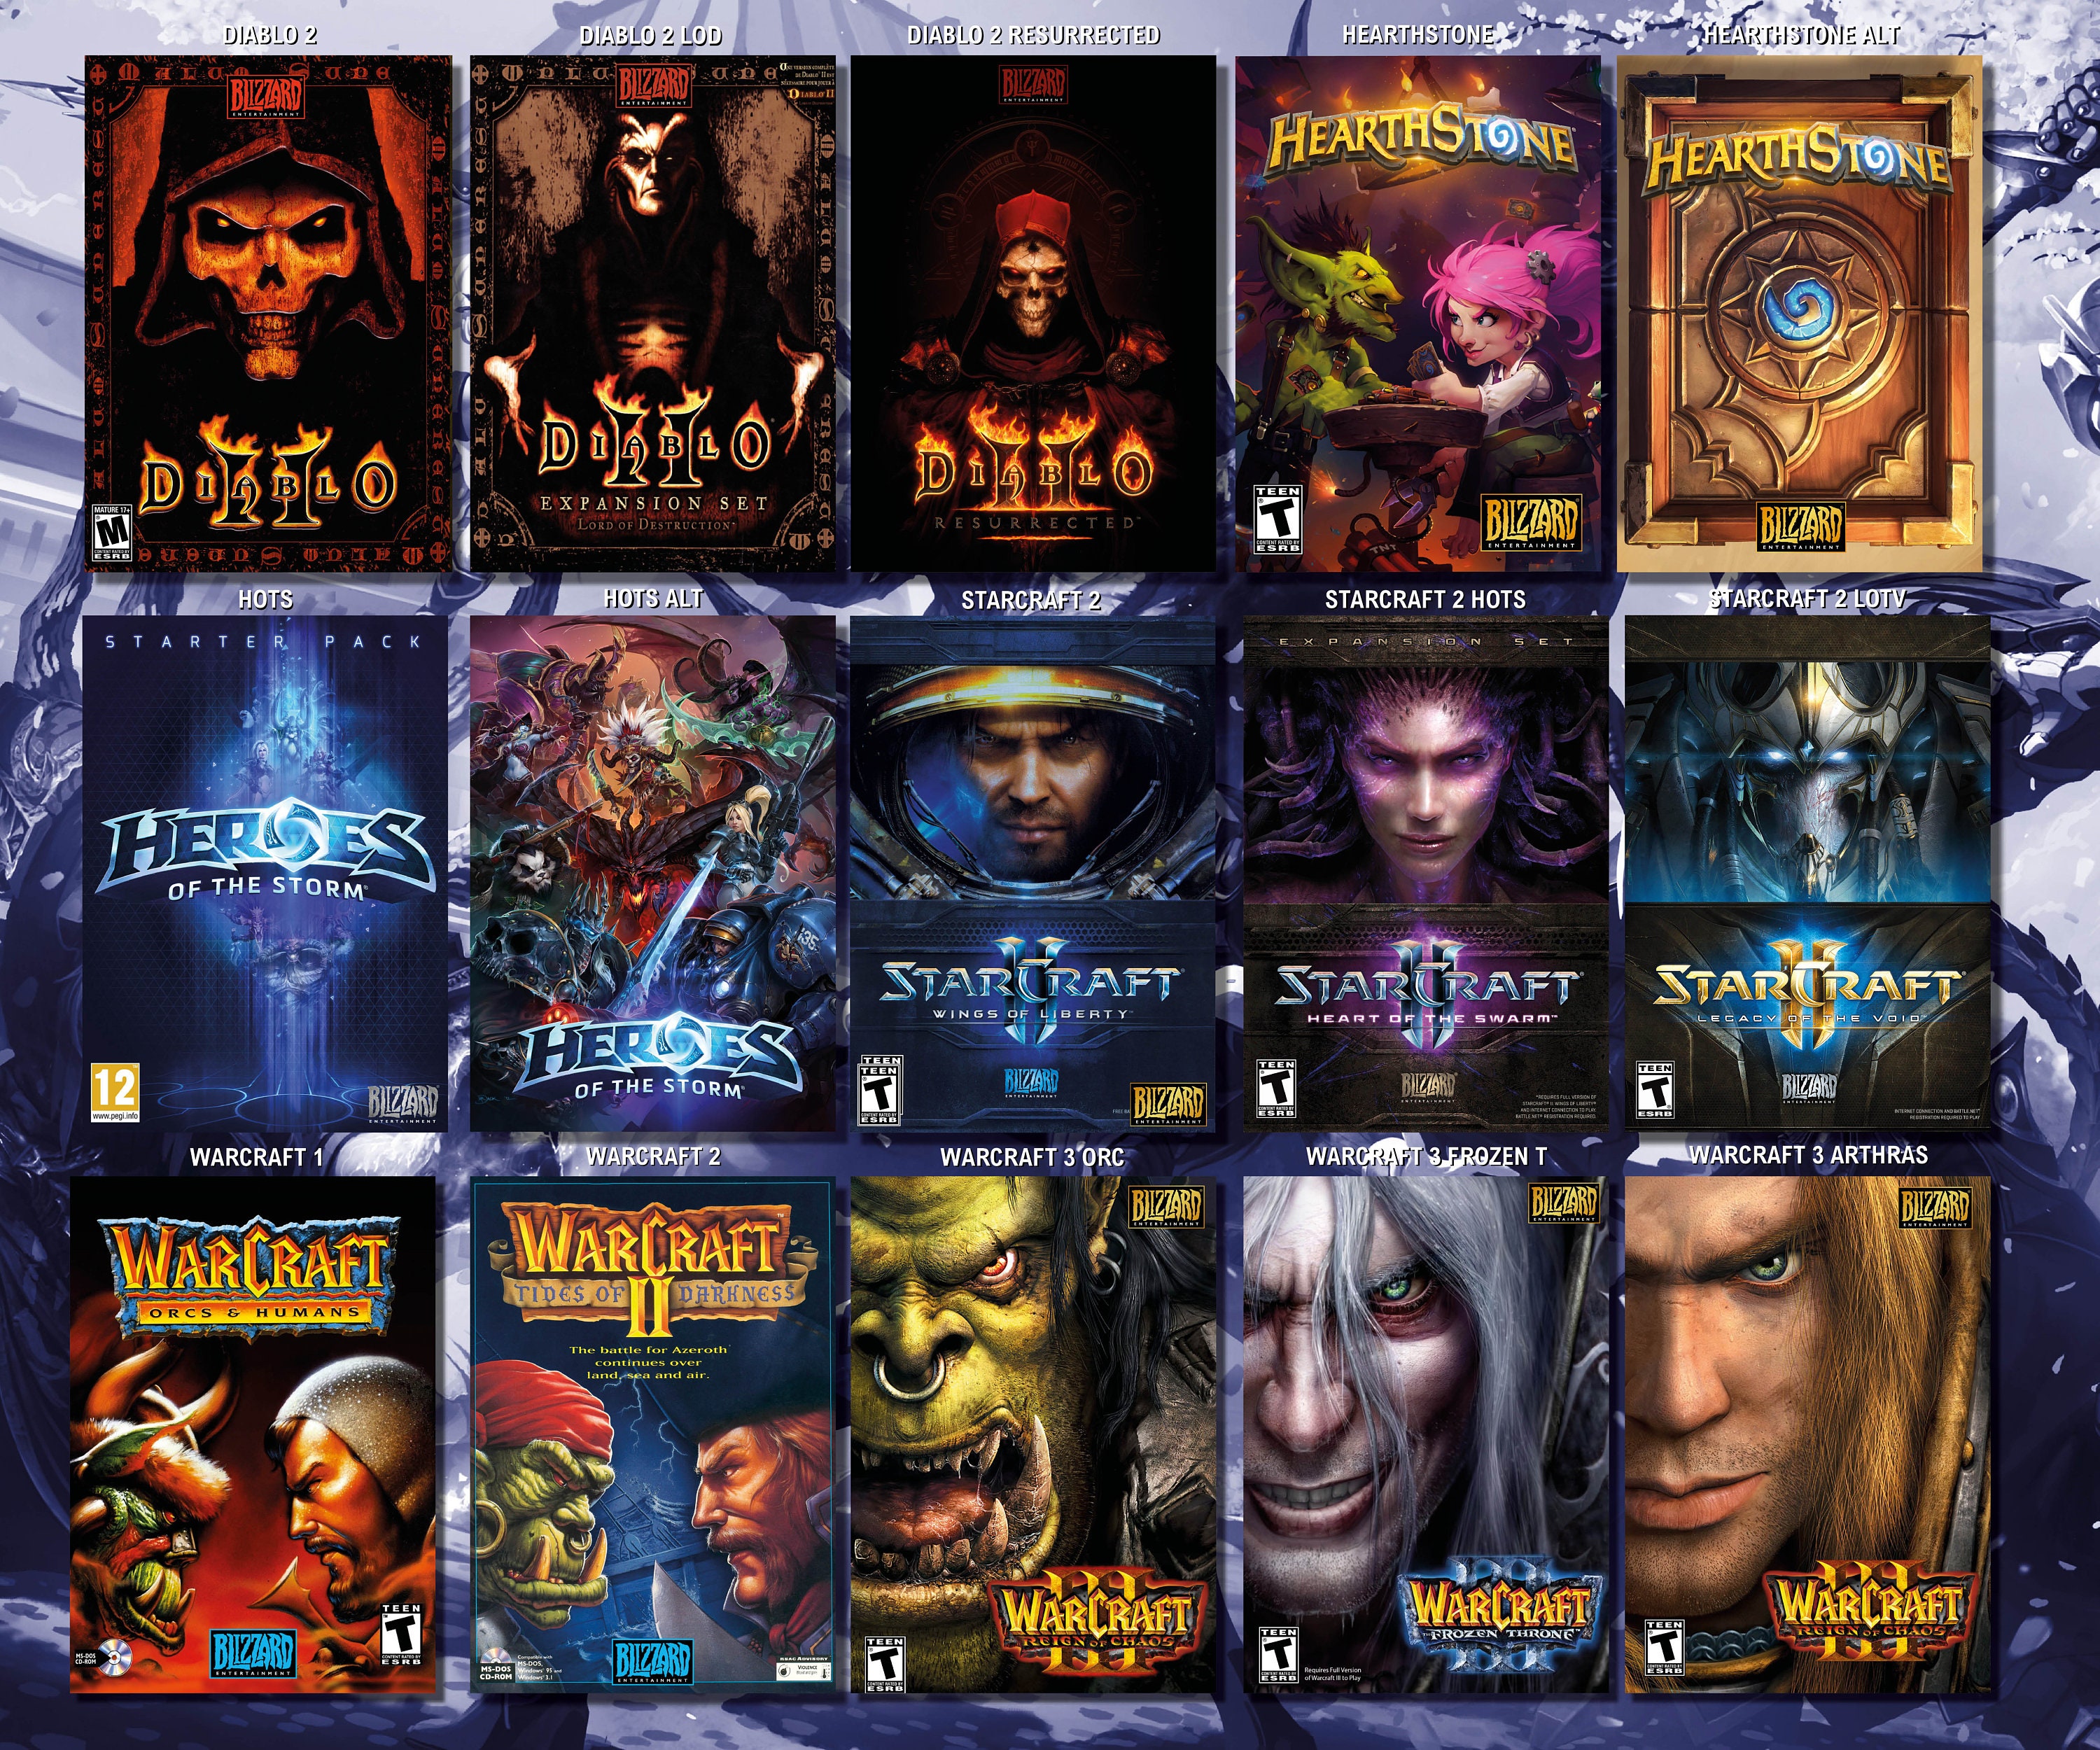 Blizzard Entertainment - All Games